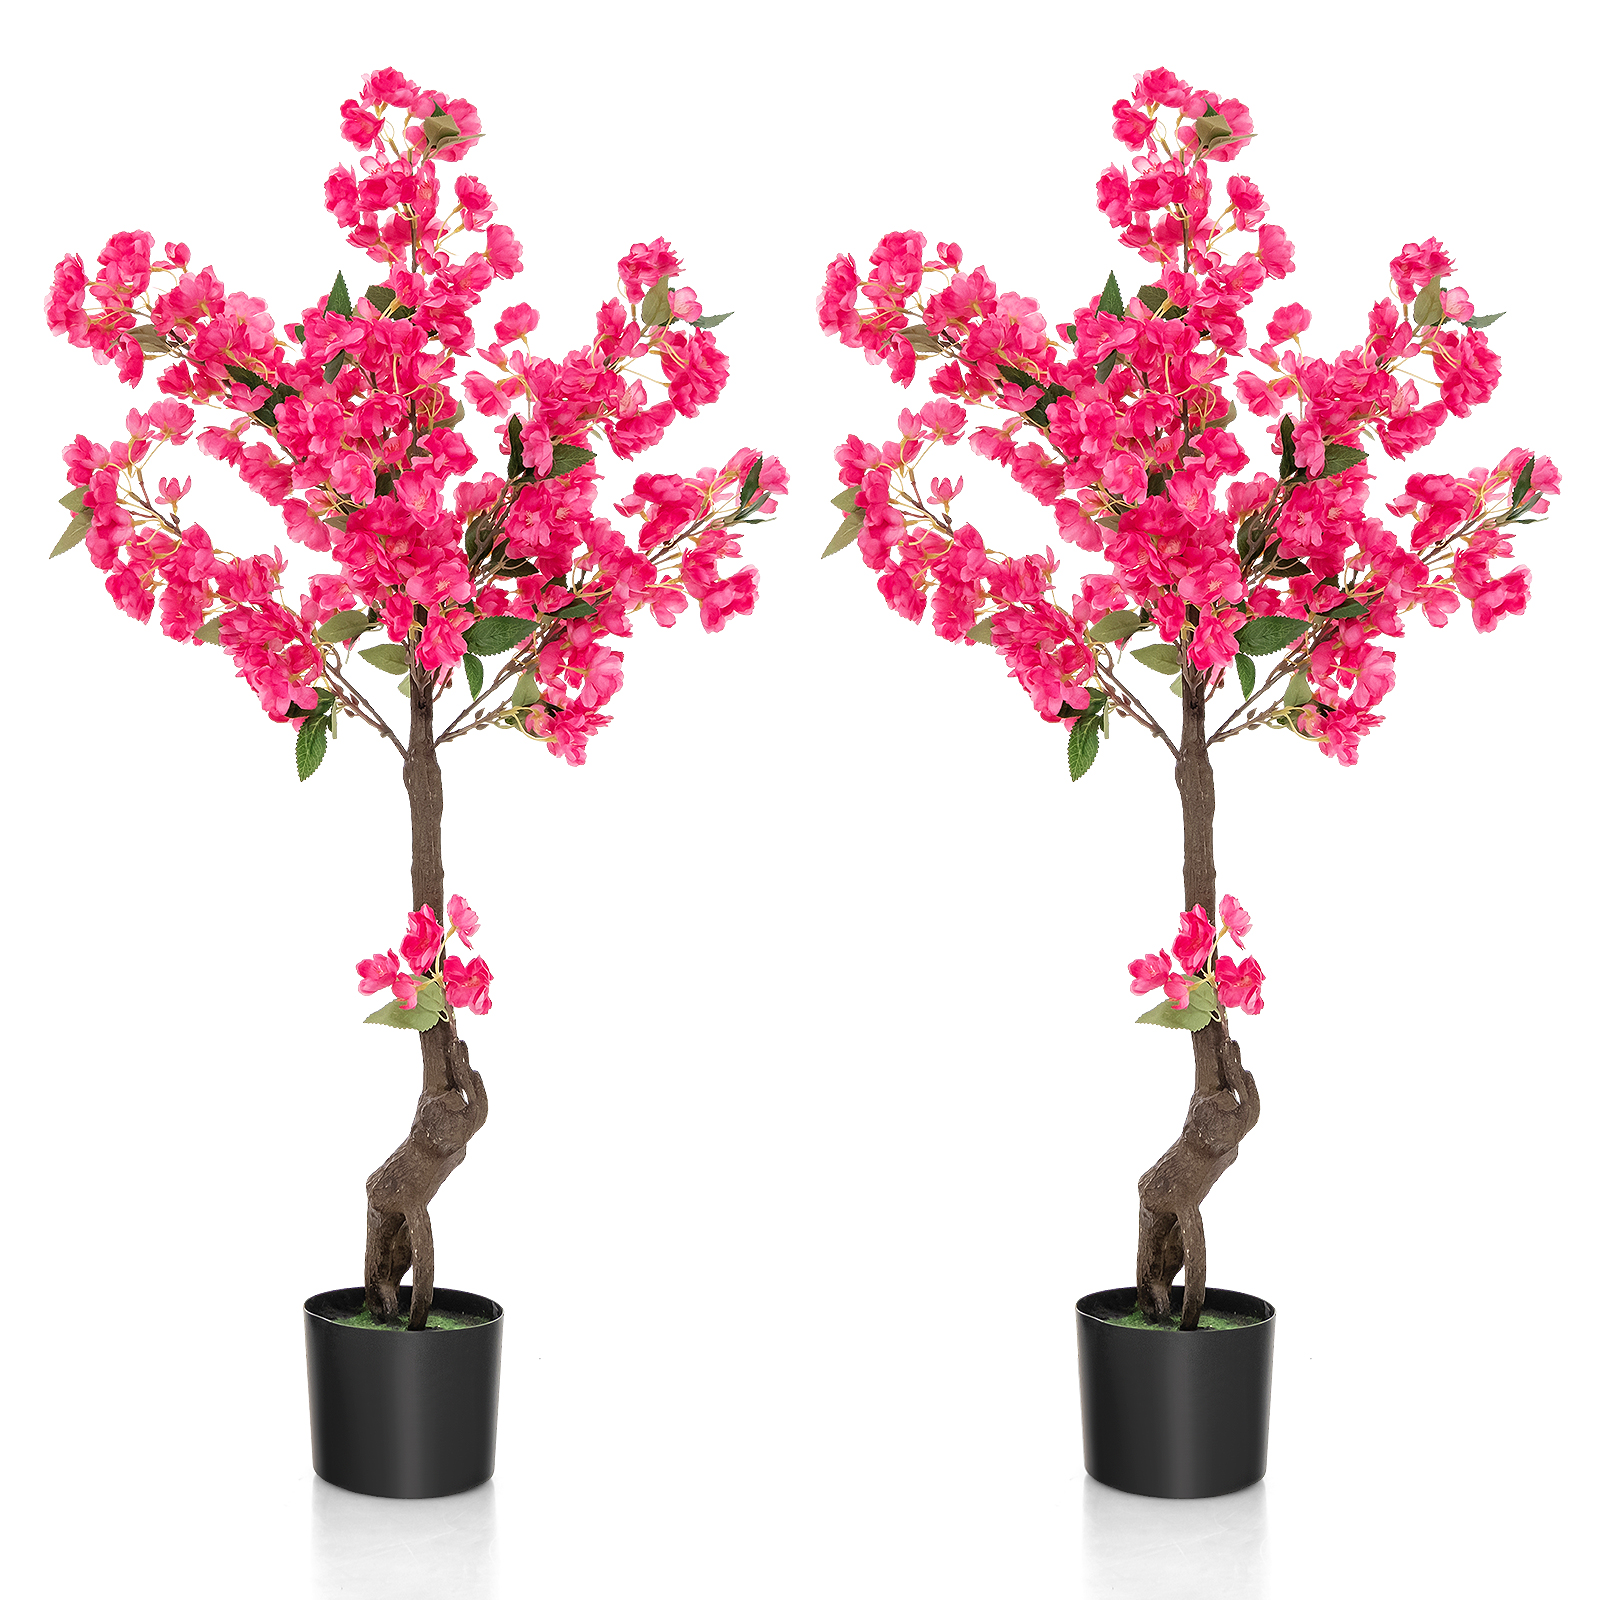 105 CM Artificial Plum Blossom Tree with 96 Flowers-2 Pieces